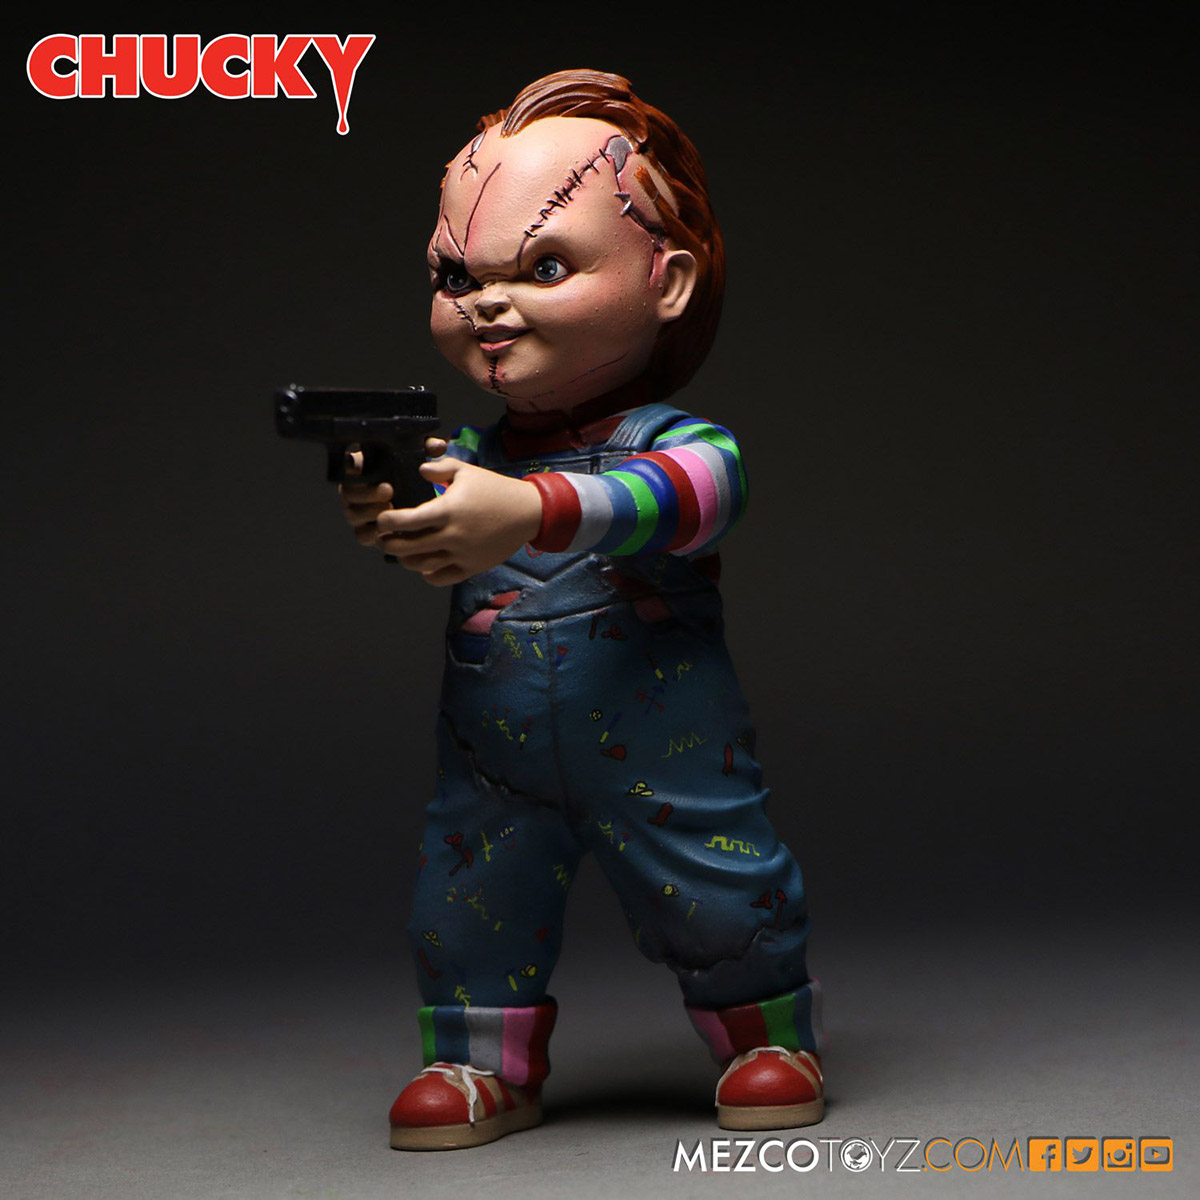 Mezco’s 5-inch tall Chucky Action Figure.